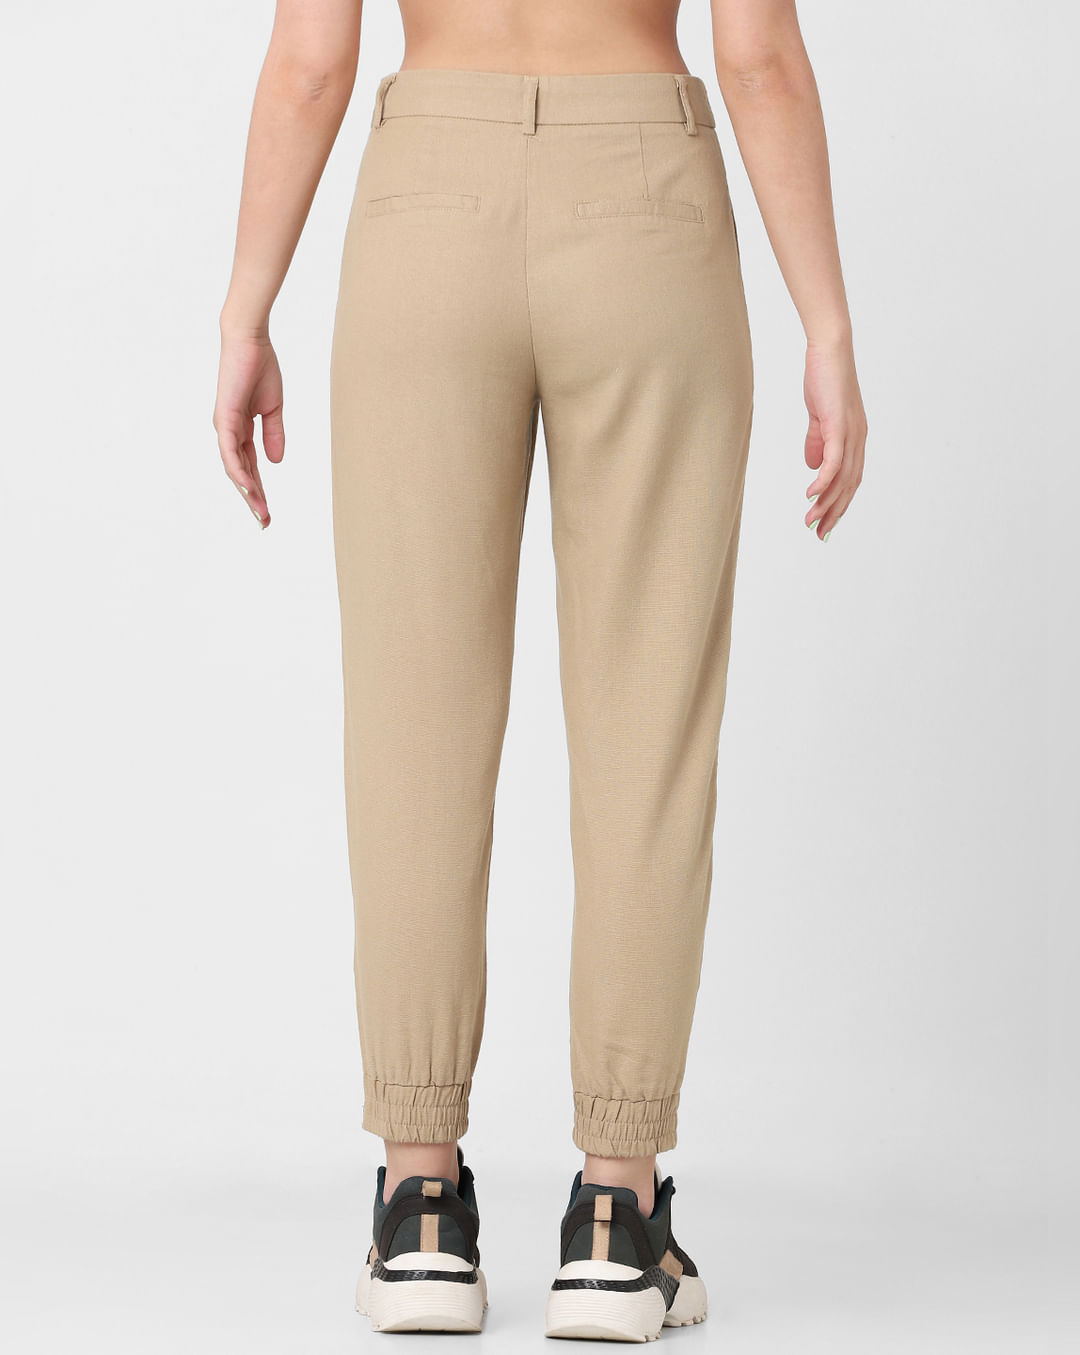 Lululemon Khaki Pants Women's Size 8